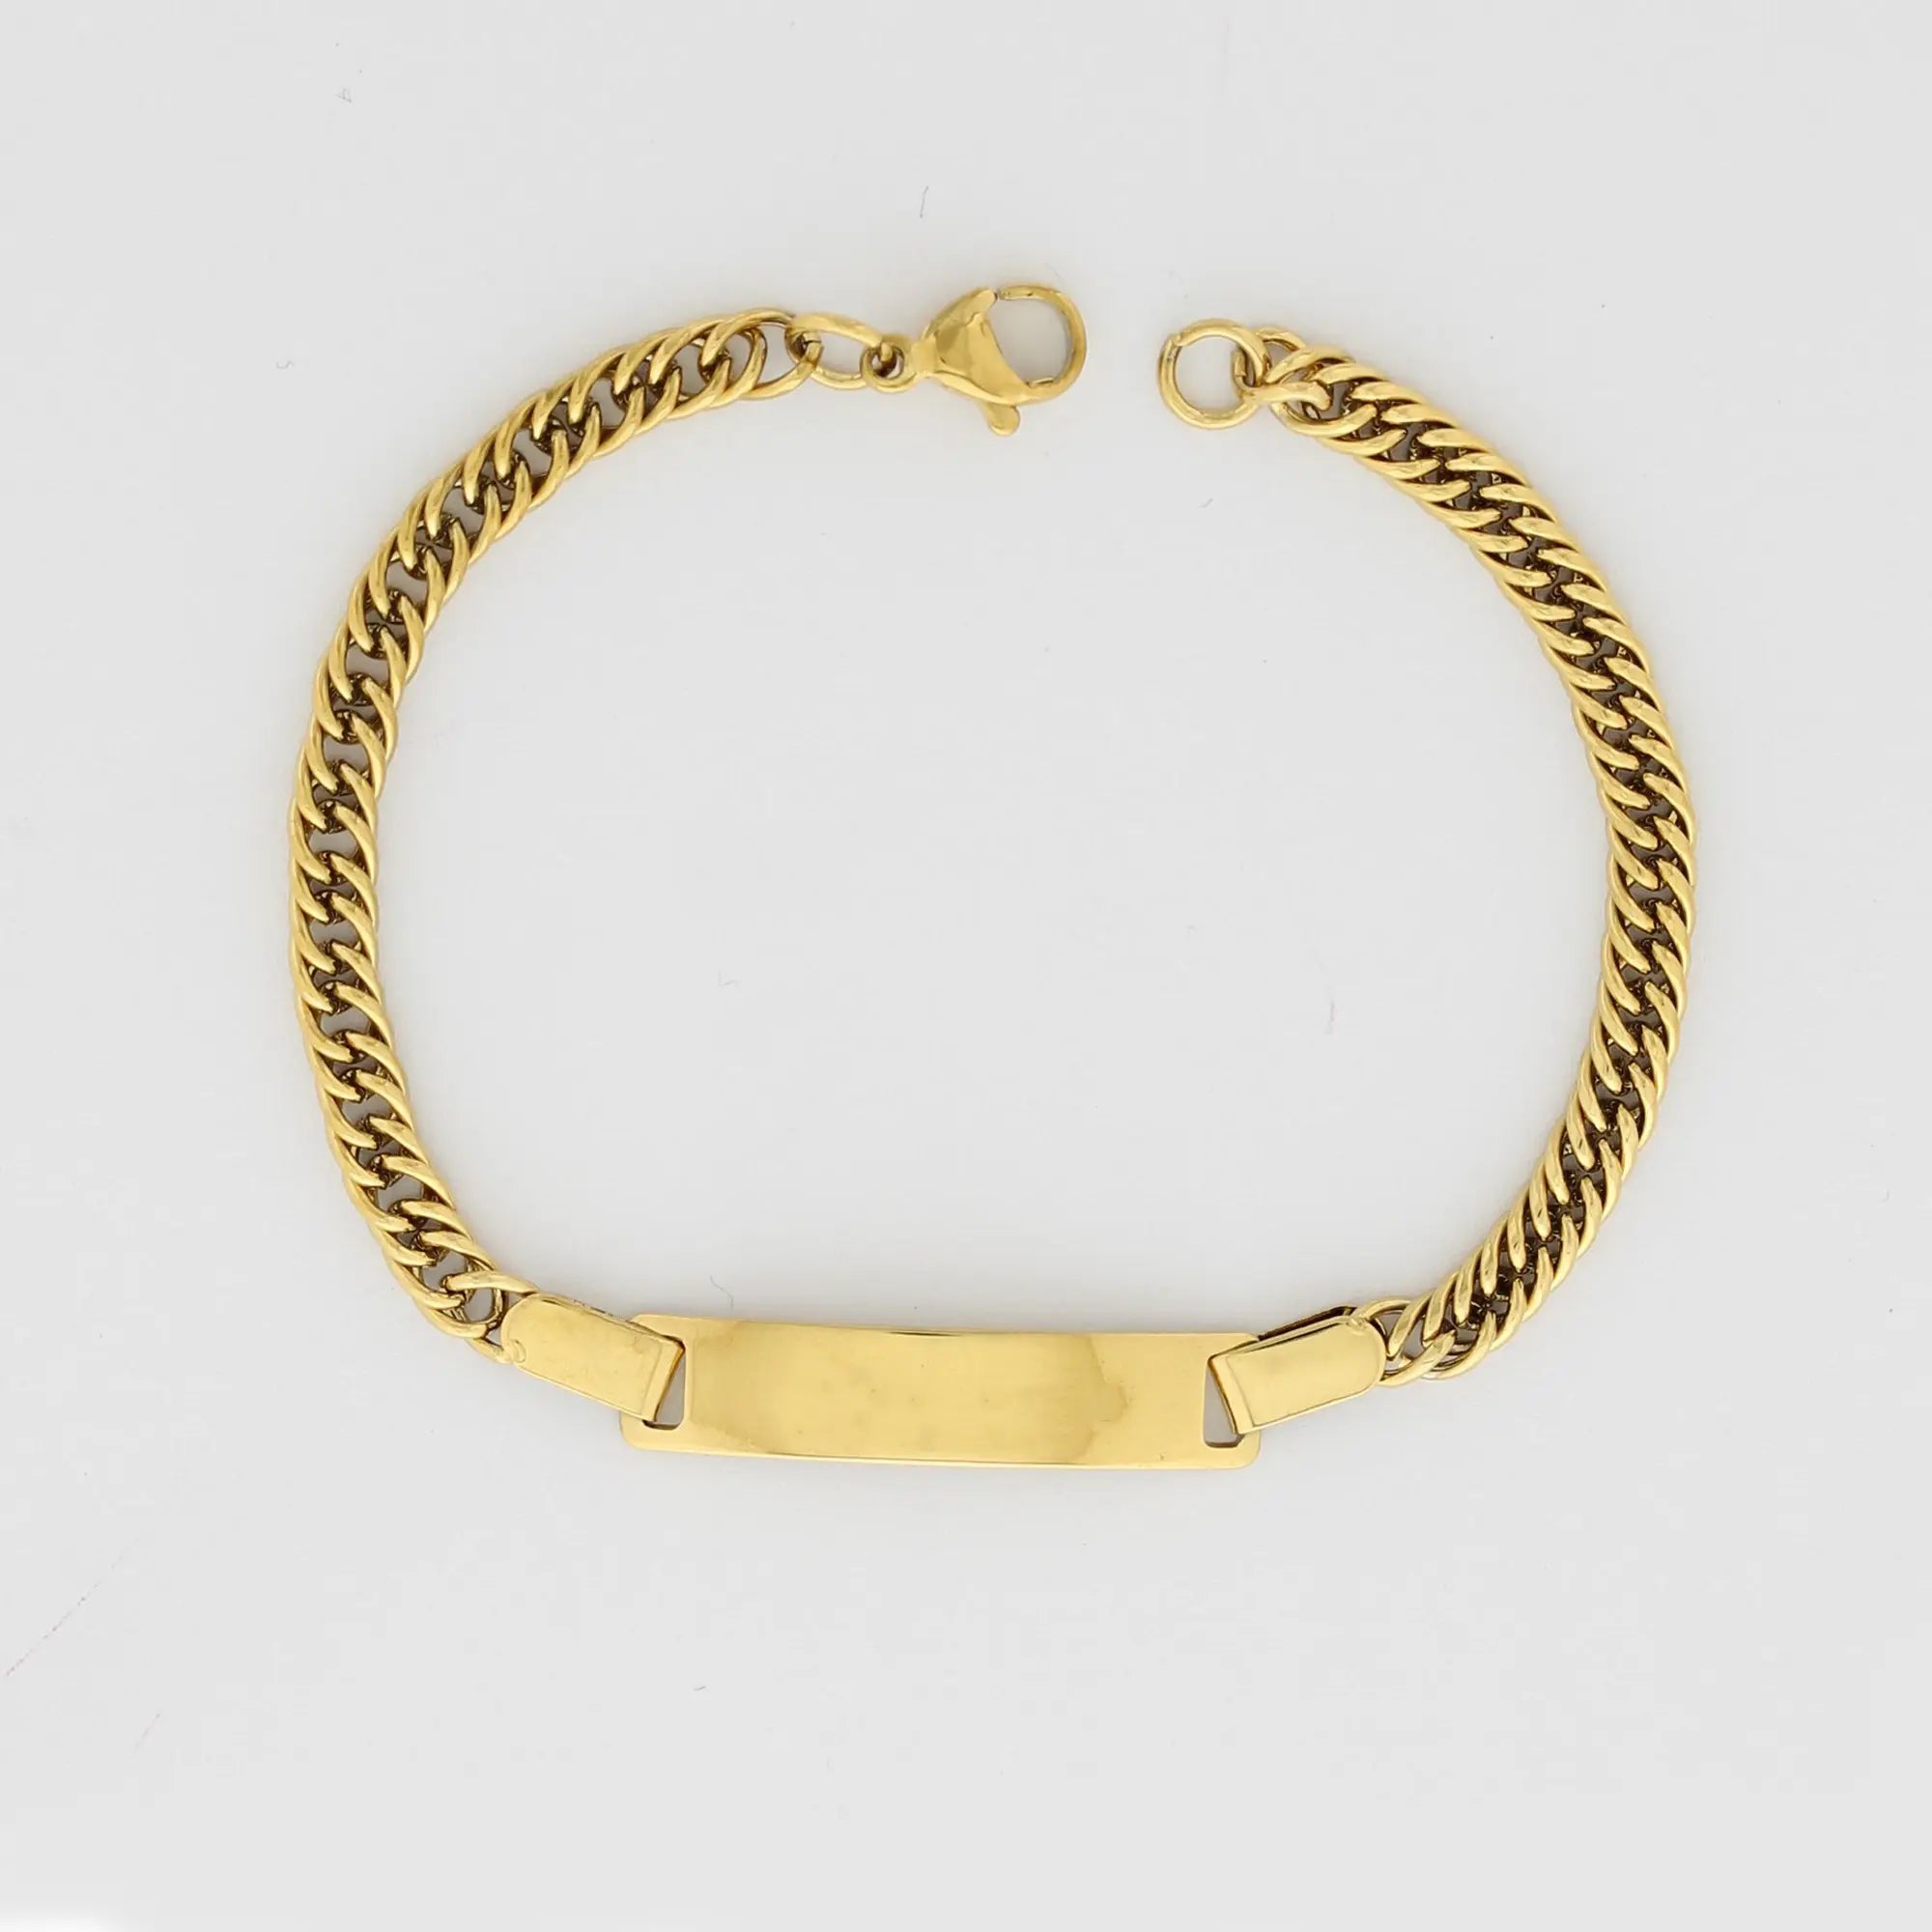 Minimalist gold bracelet